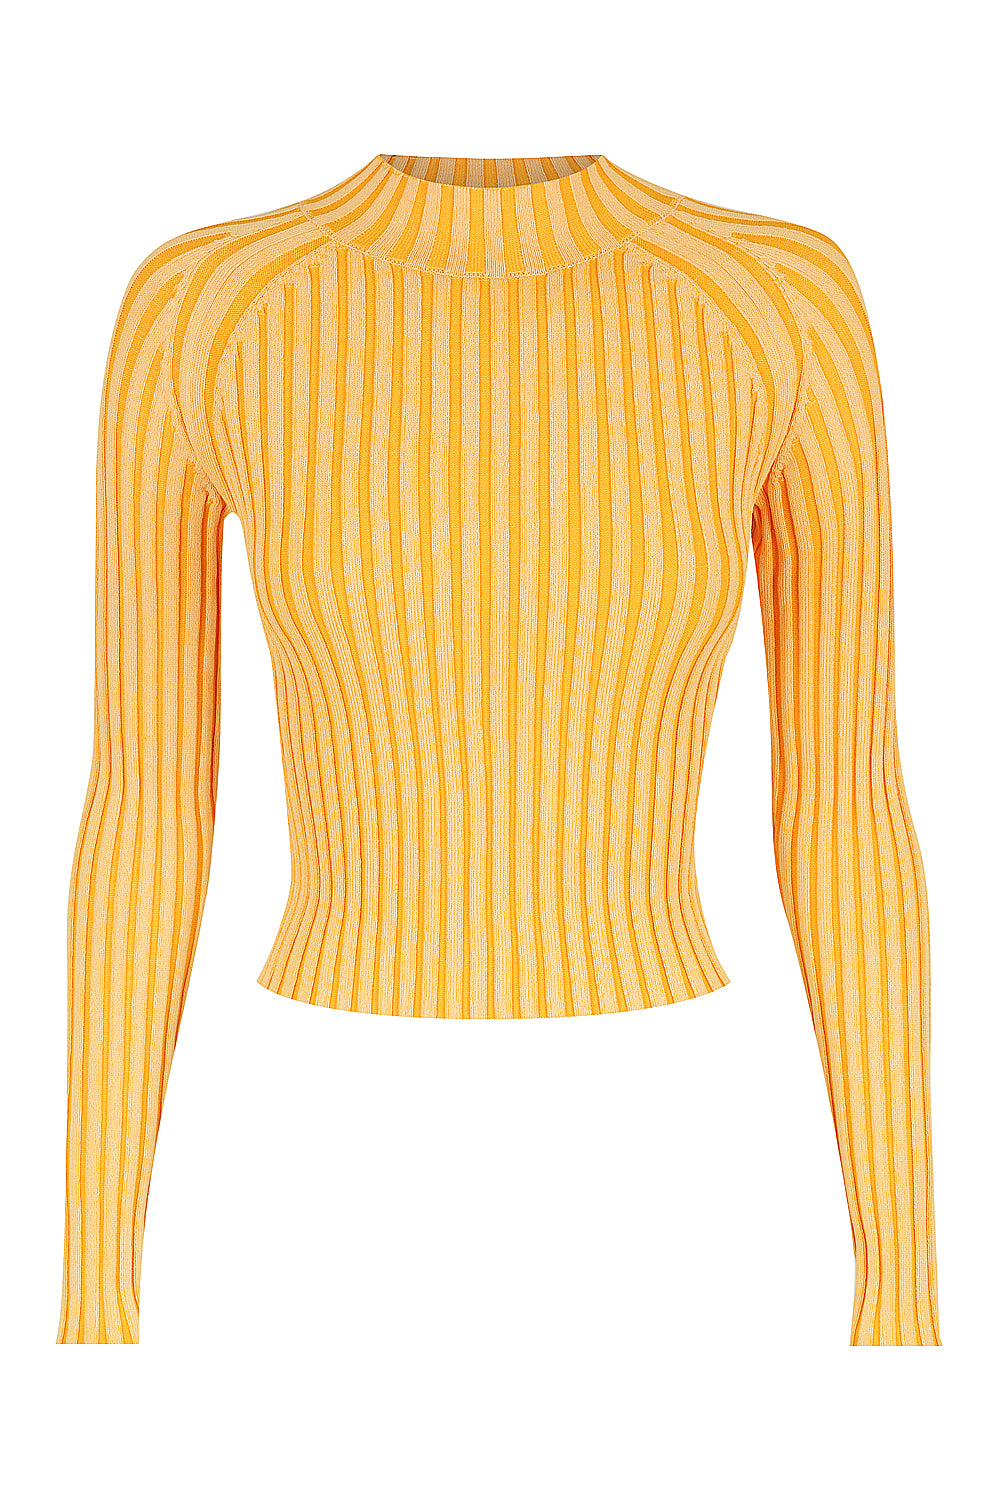 Women’s Yellow / Orange The All Sorts Two-Tone Knit Top - Orange Crush Medium St Cloud Label